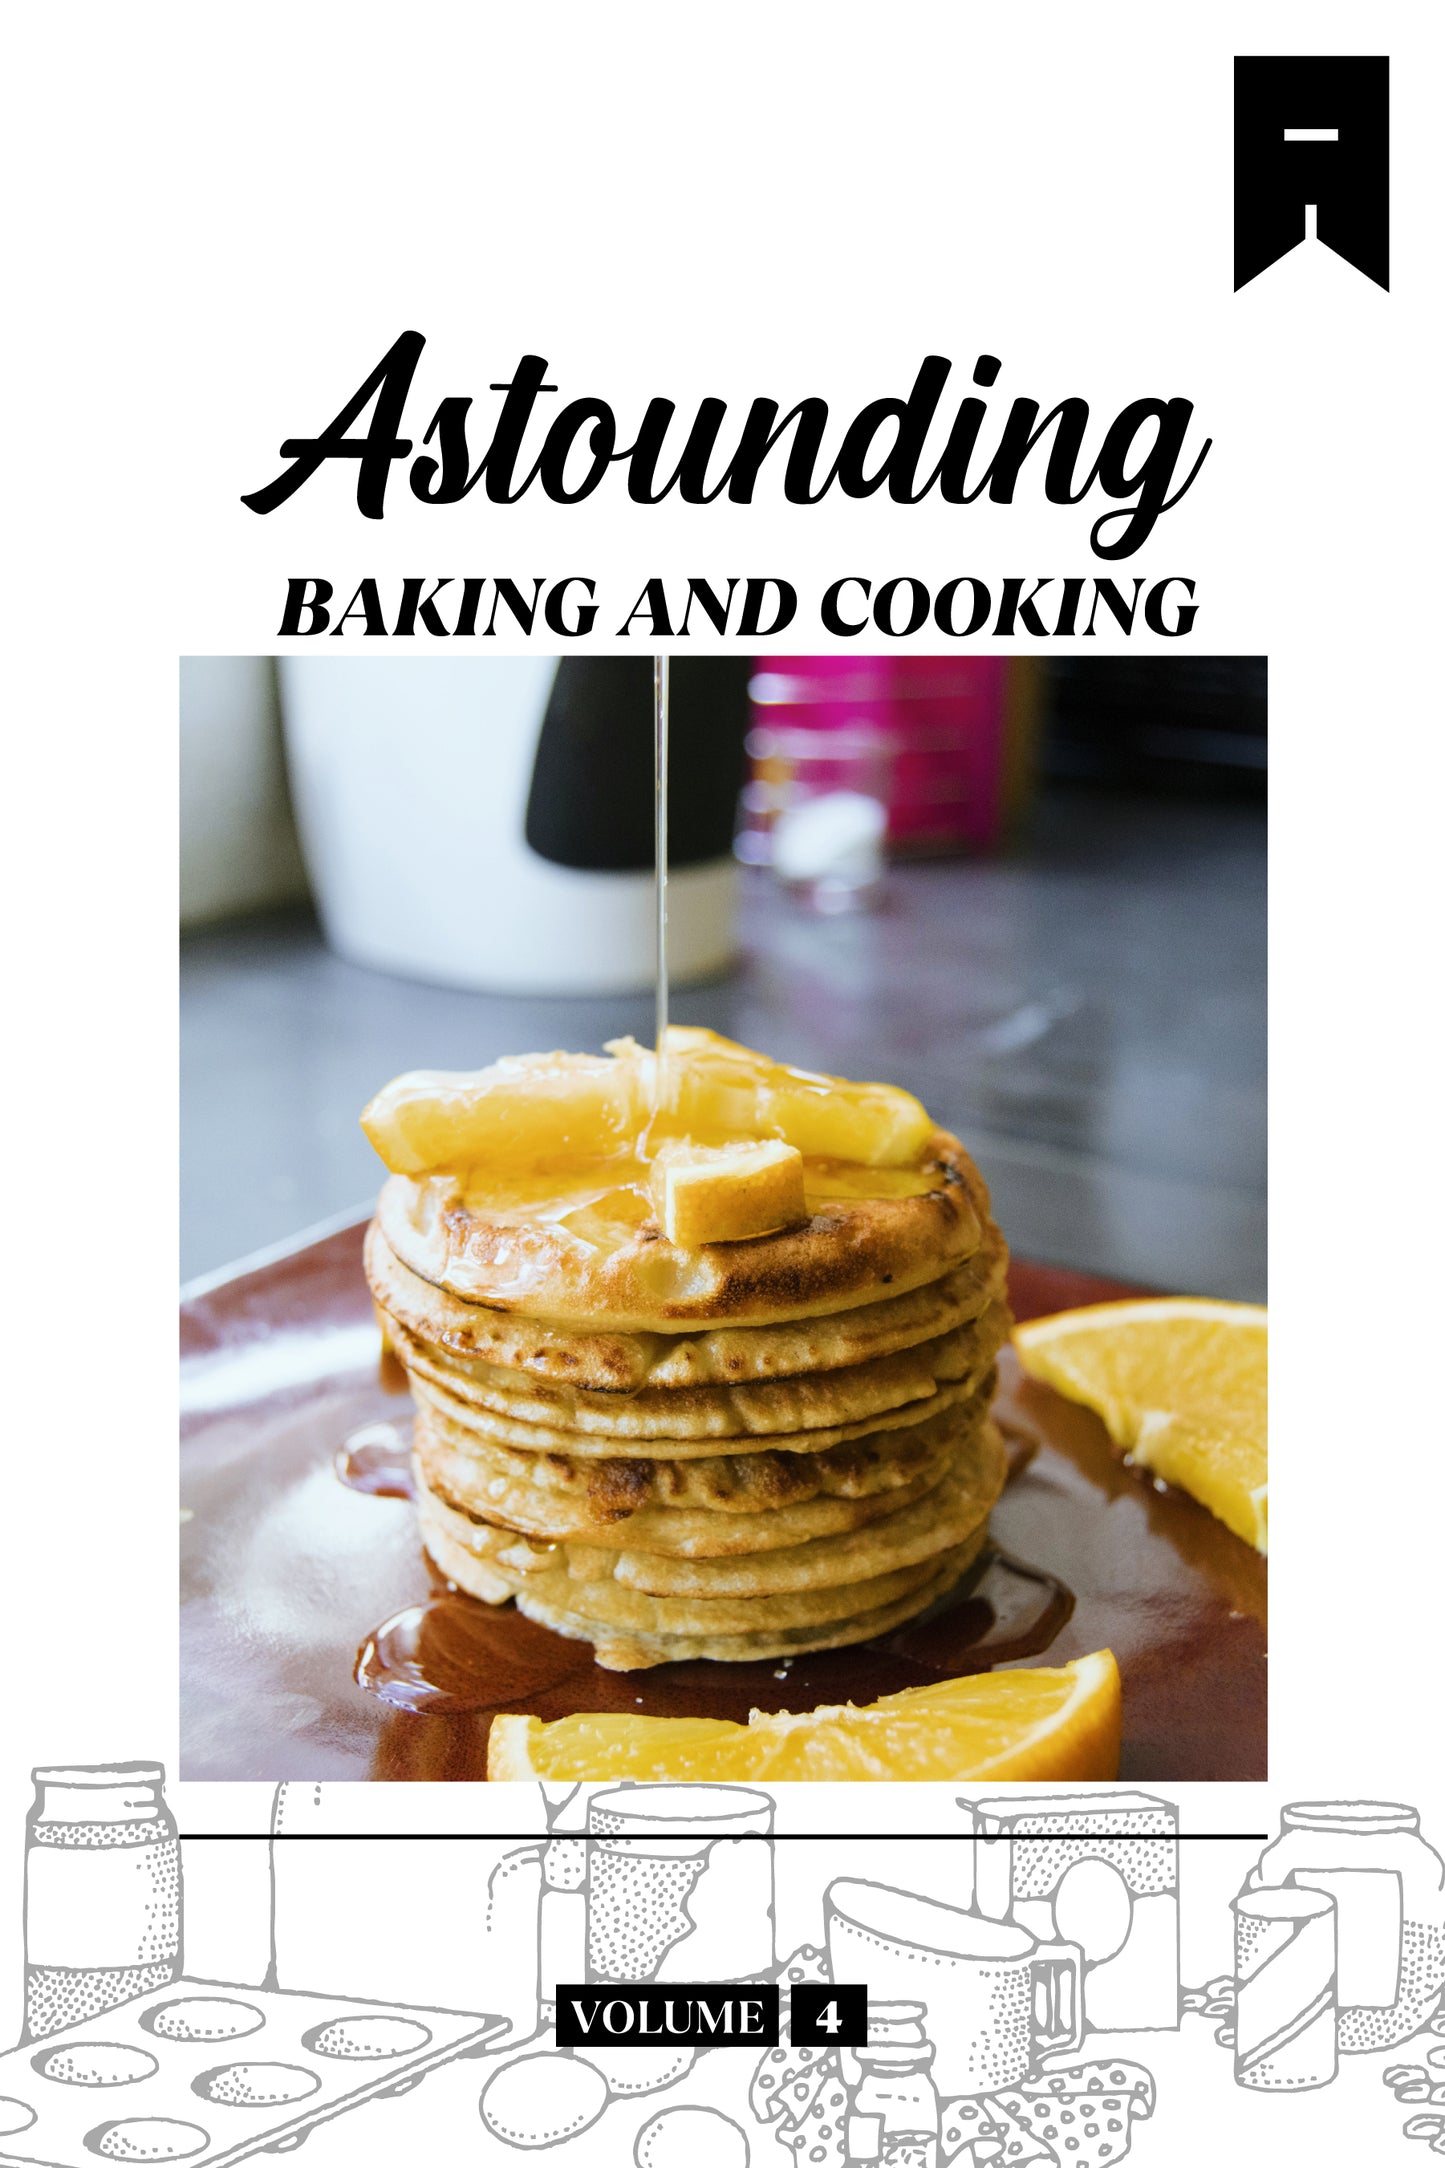 Astounding Baking (Volume 4) - Physical Book